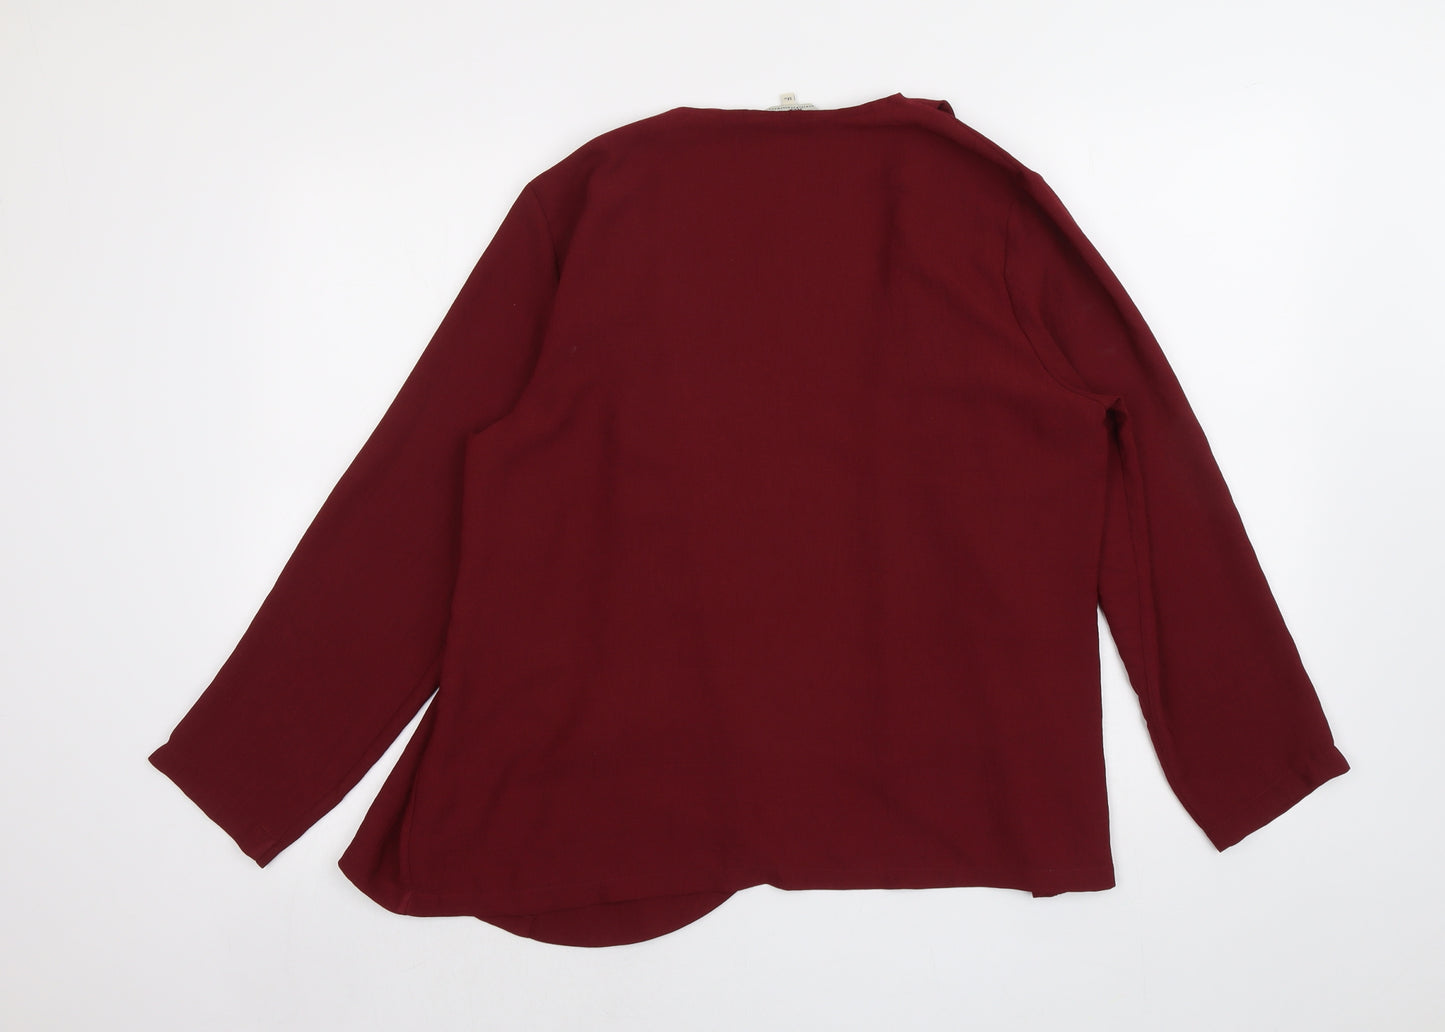 Billie & Blossom Womens Red Jacket Blazer Size 14